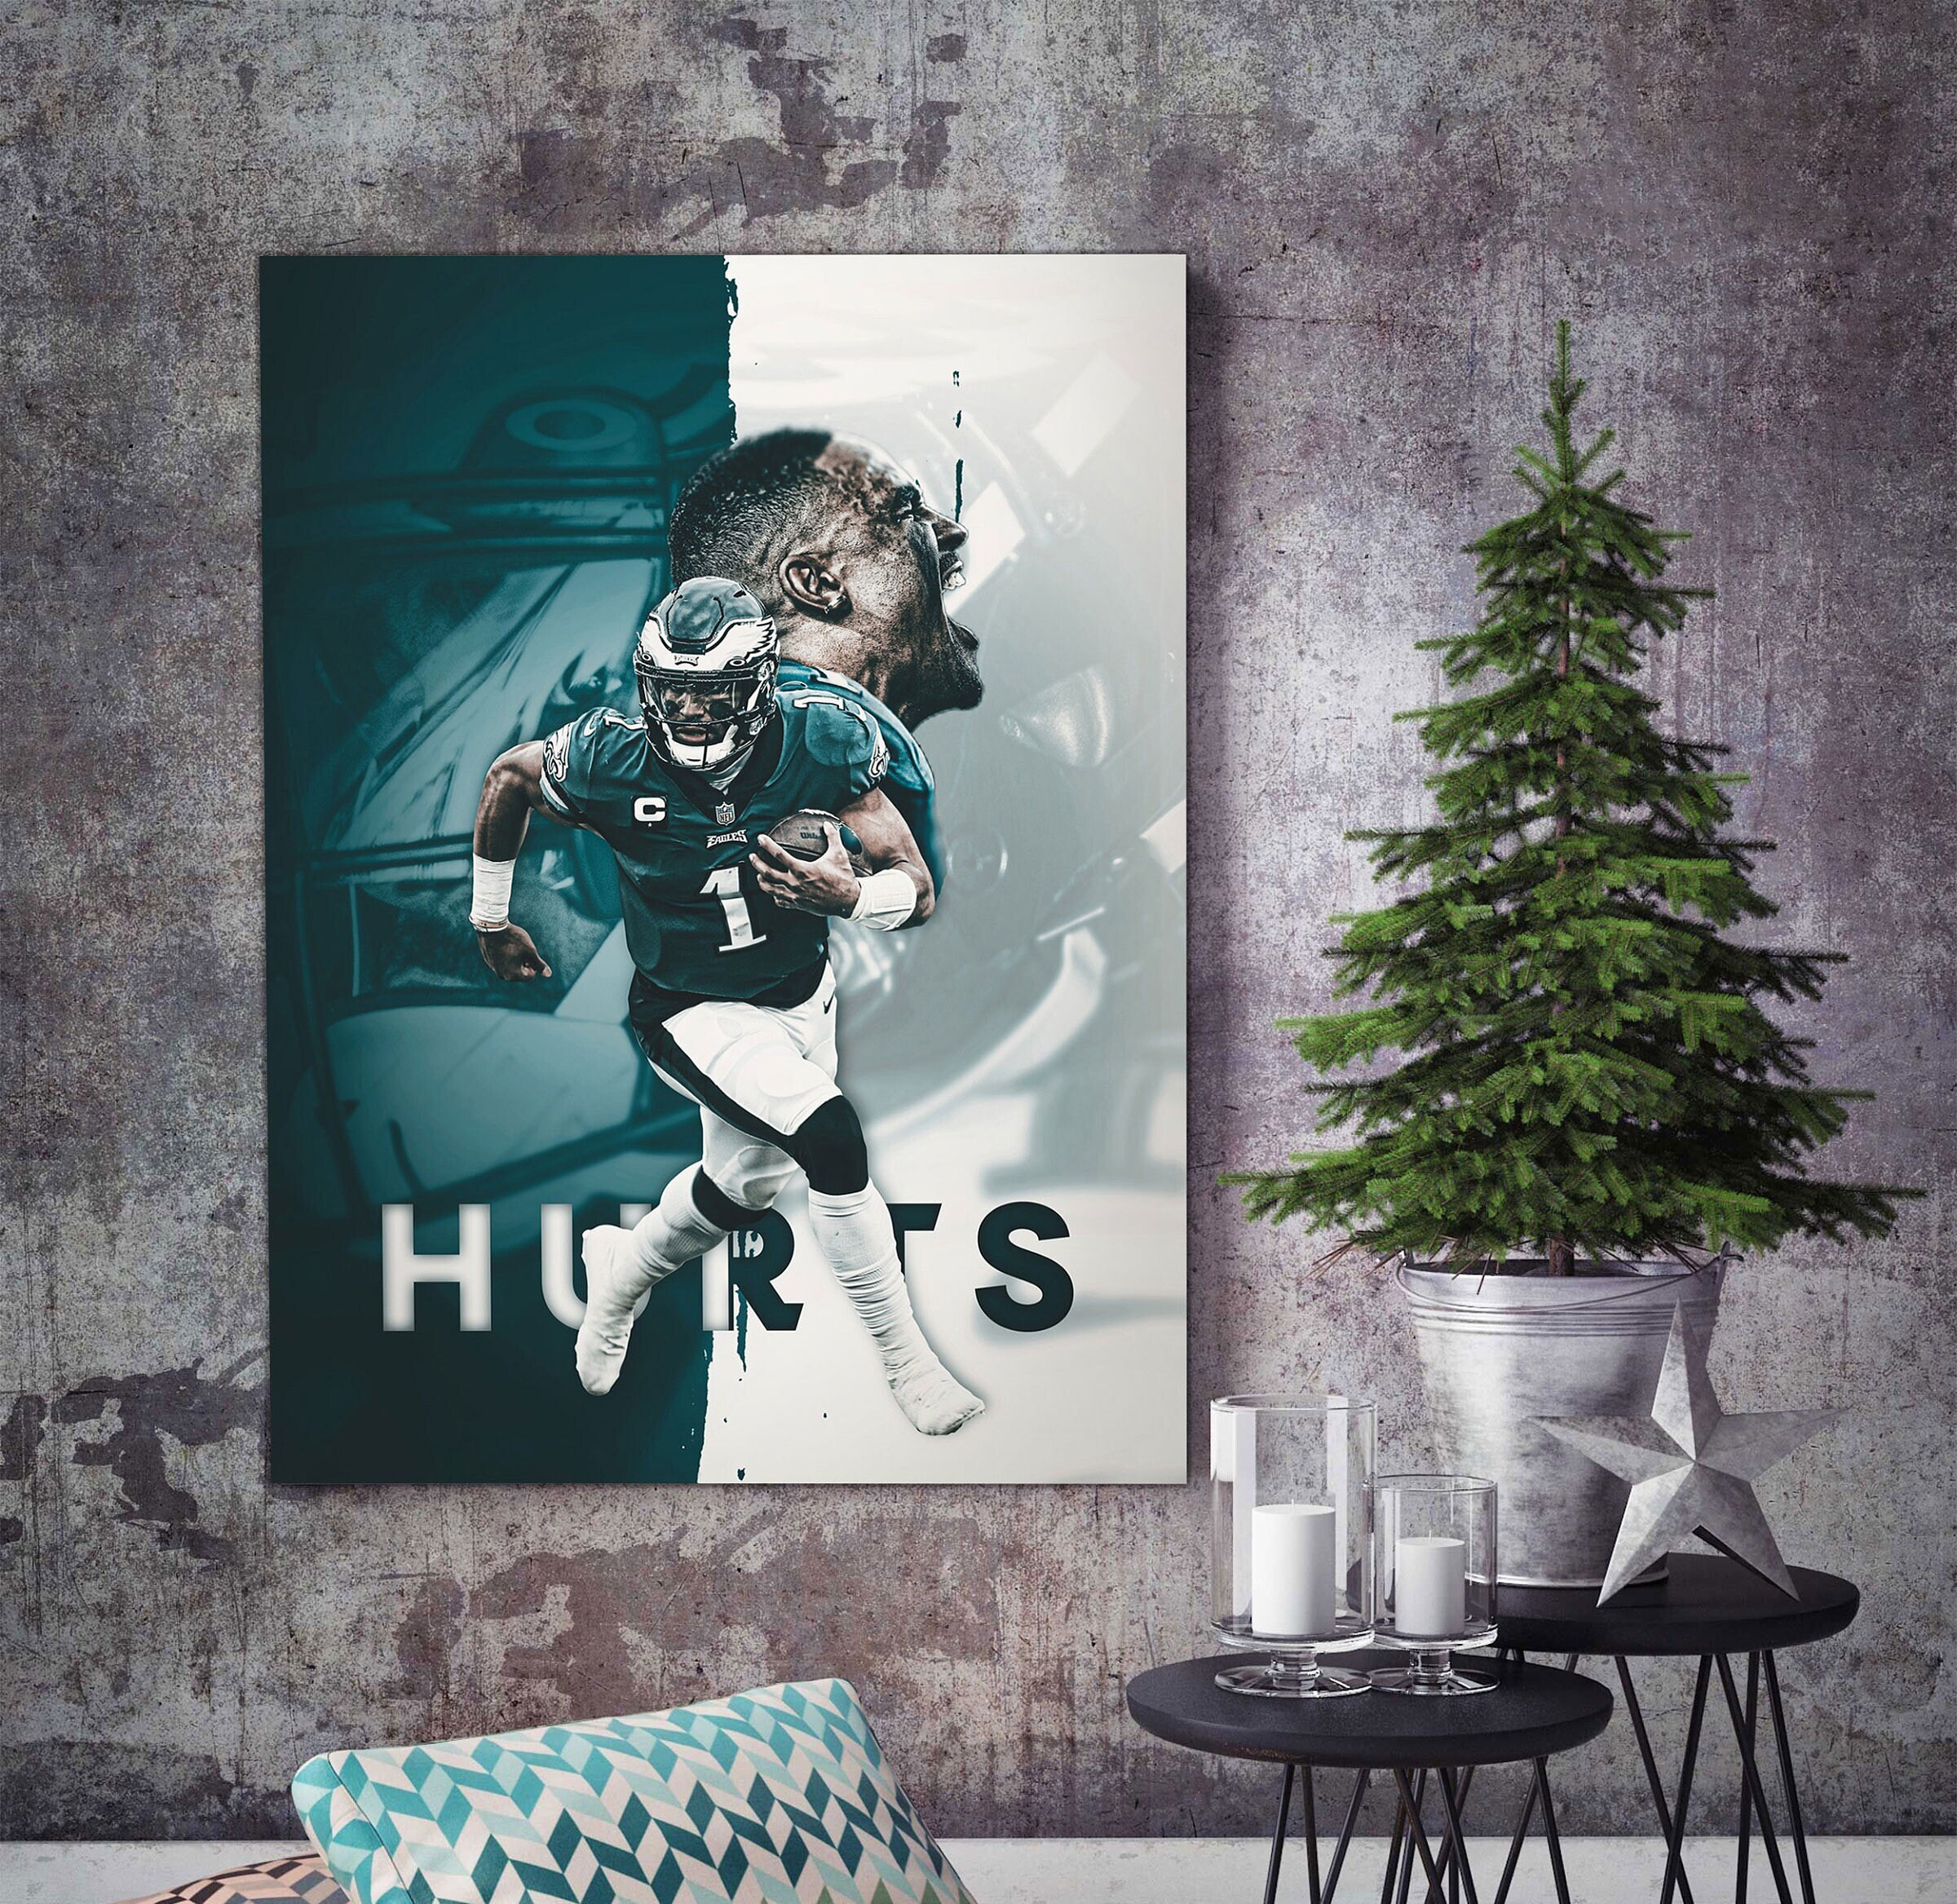 Jalen Hurts Poster, Phila-del-phia Poster